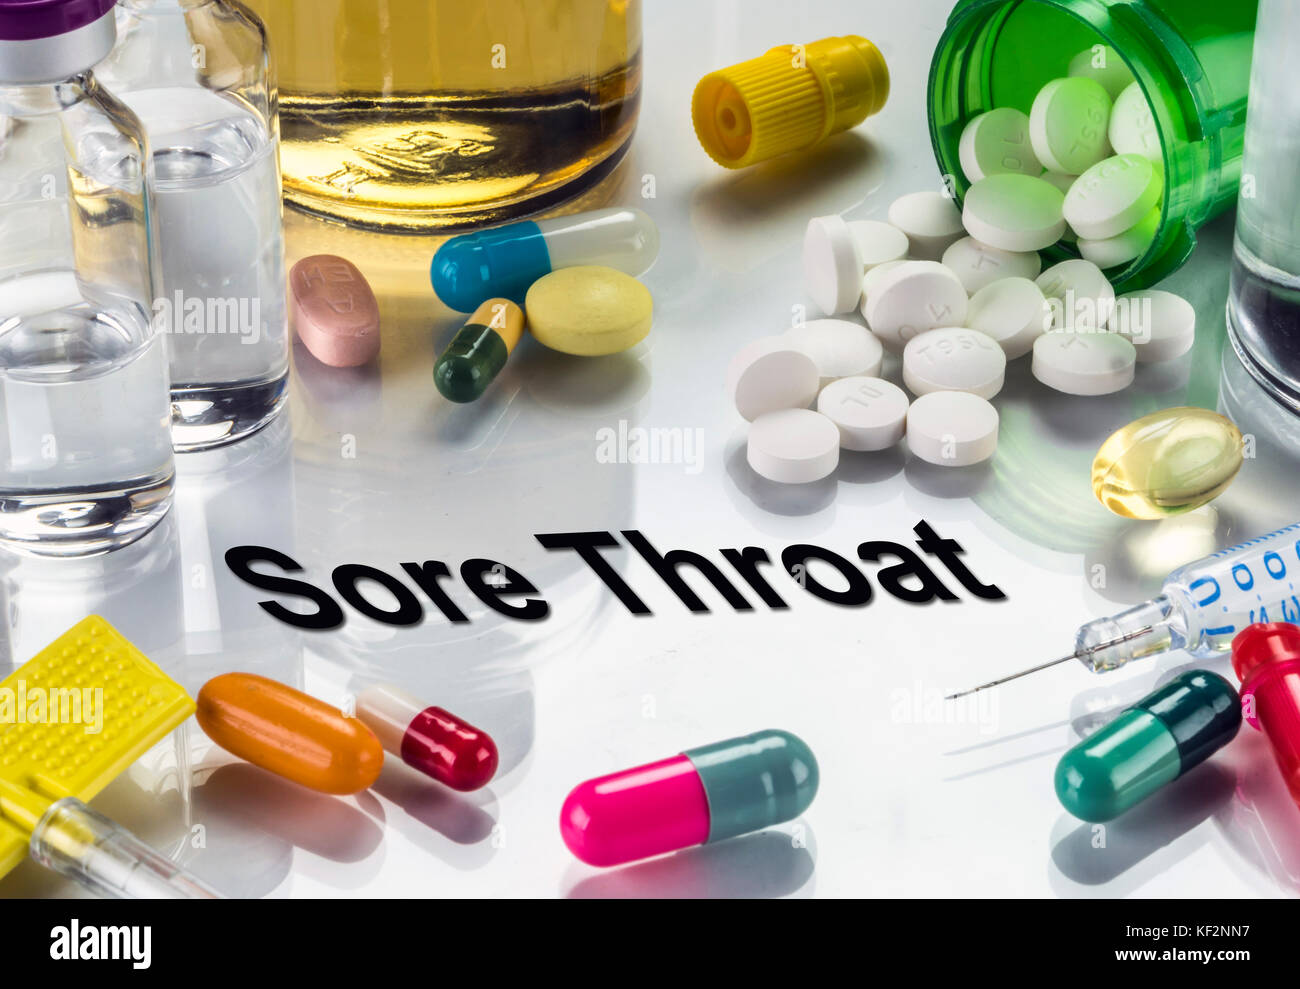 Sore throat, medicines as concept of ordinary treatment, conceptual image Stock Photo